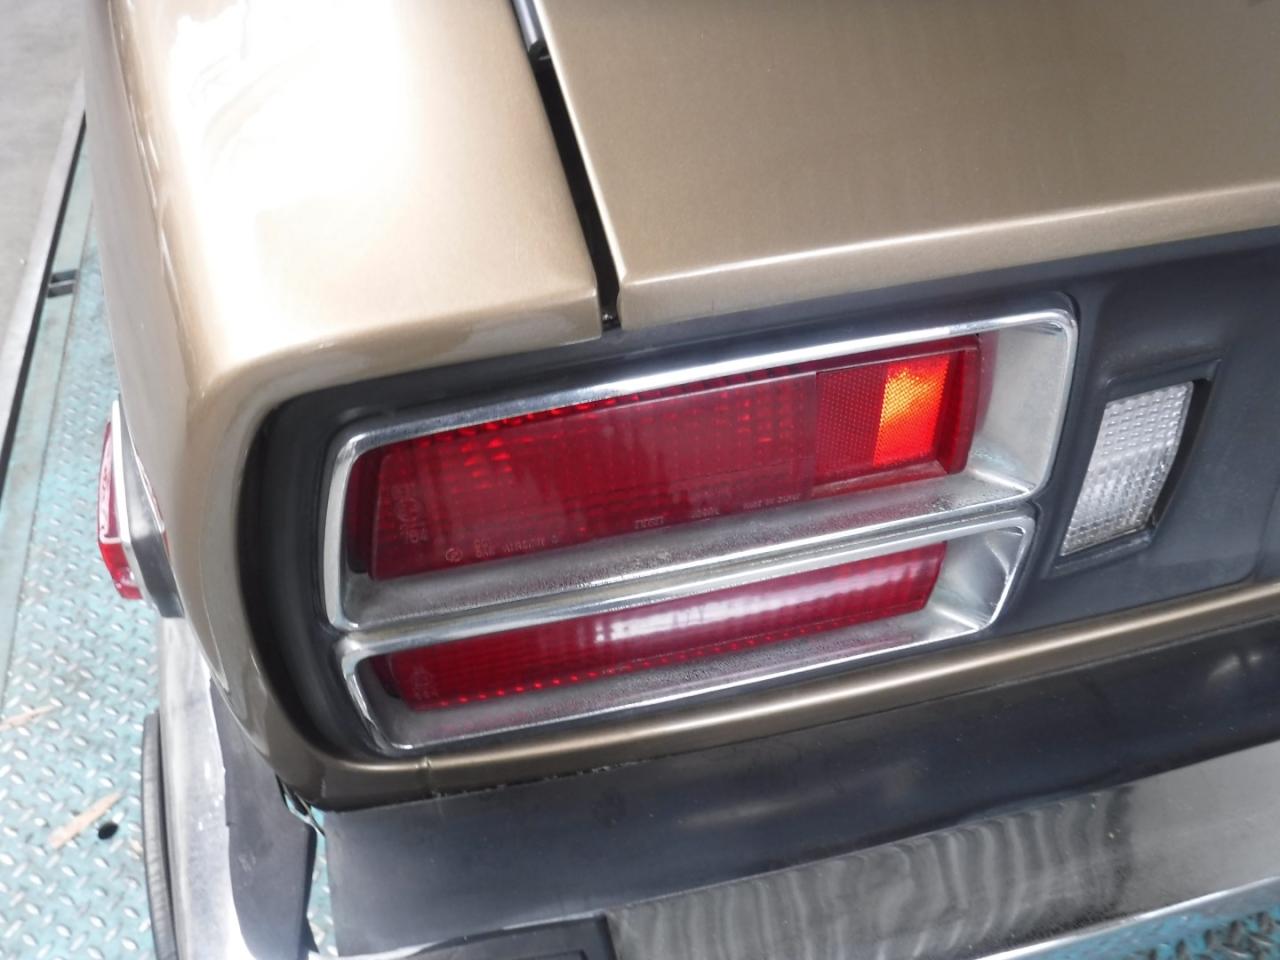 1974 Datsun 260Z gold